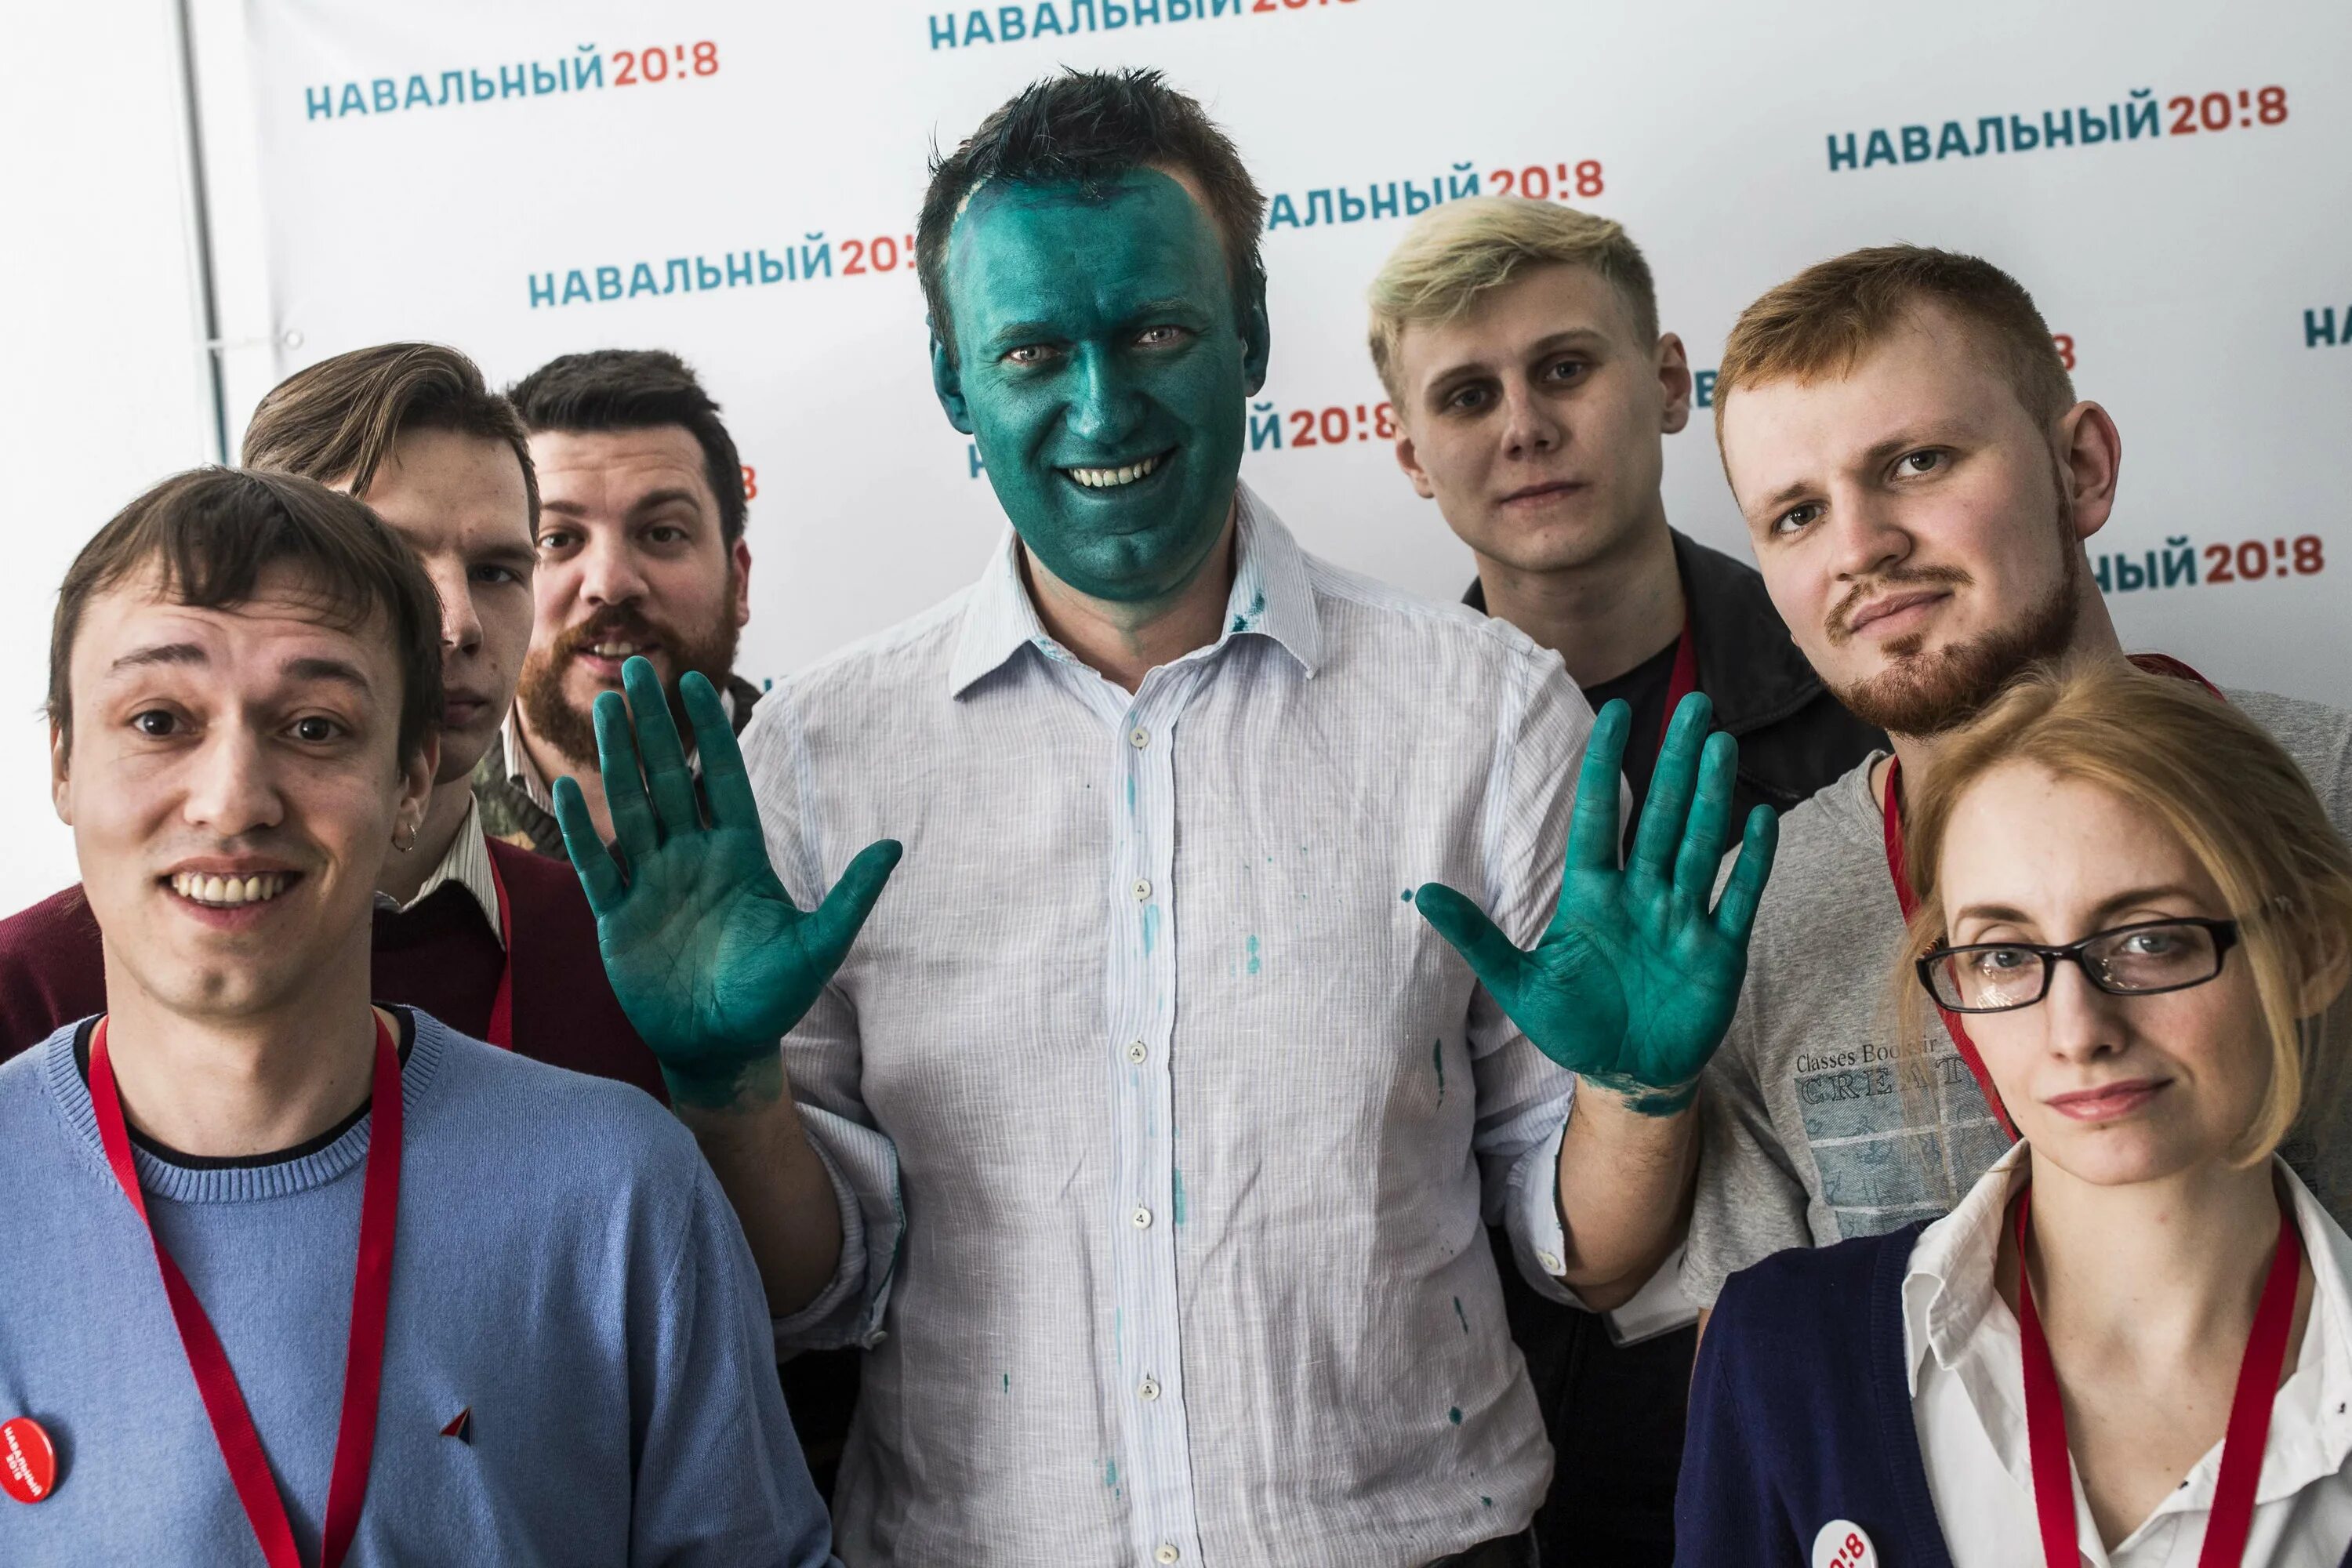 Команда Навального. Отряды Навального. Команда Навального фото. Команда Алексея Навального. Remember navalniy